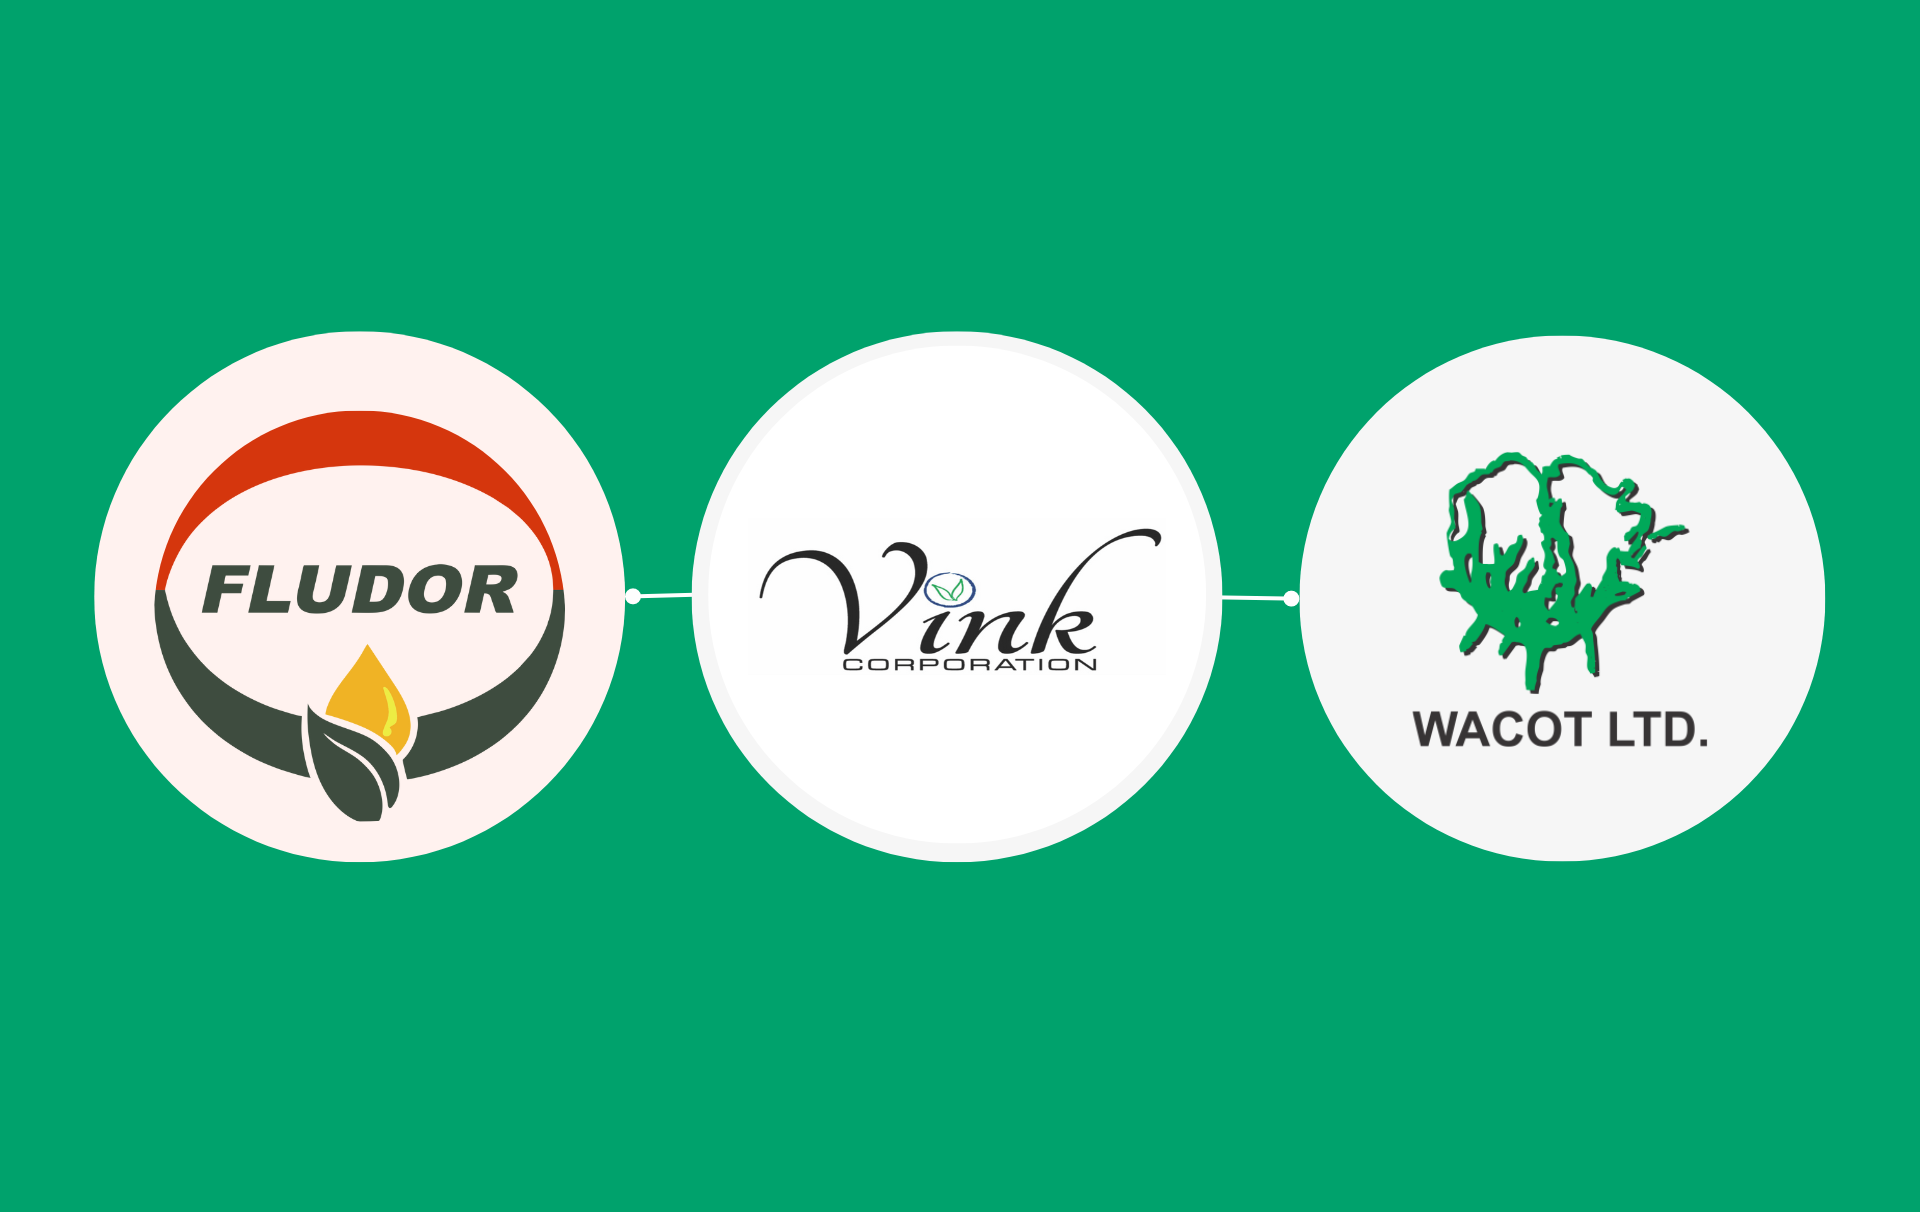 Fludor, WACOT and Vink logos